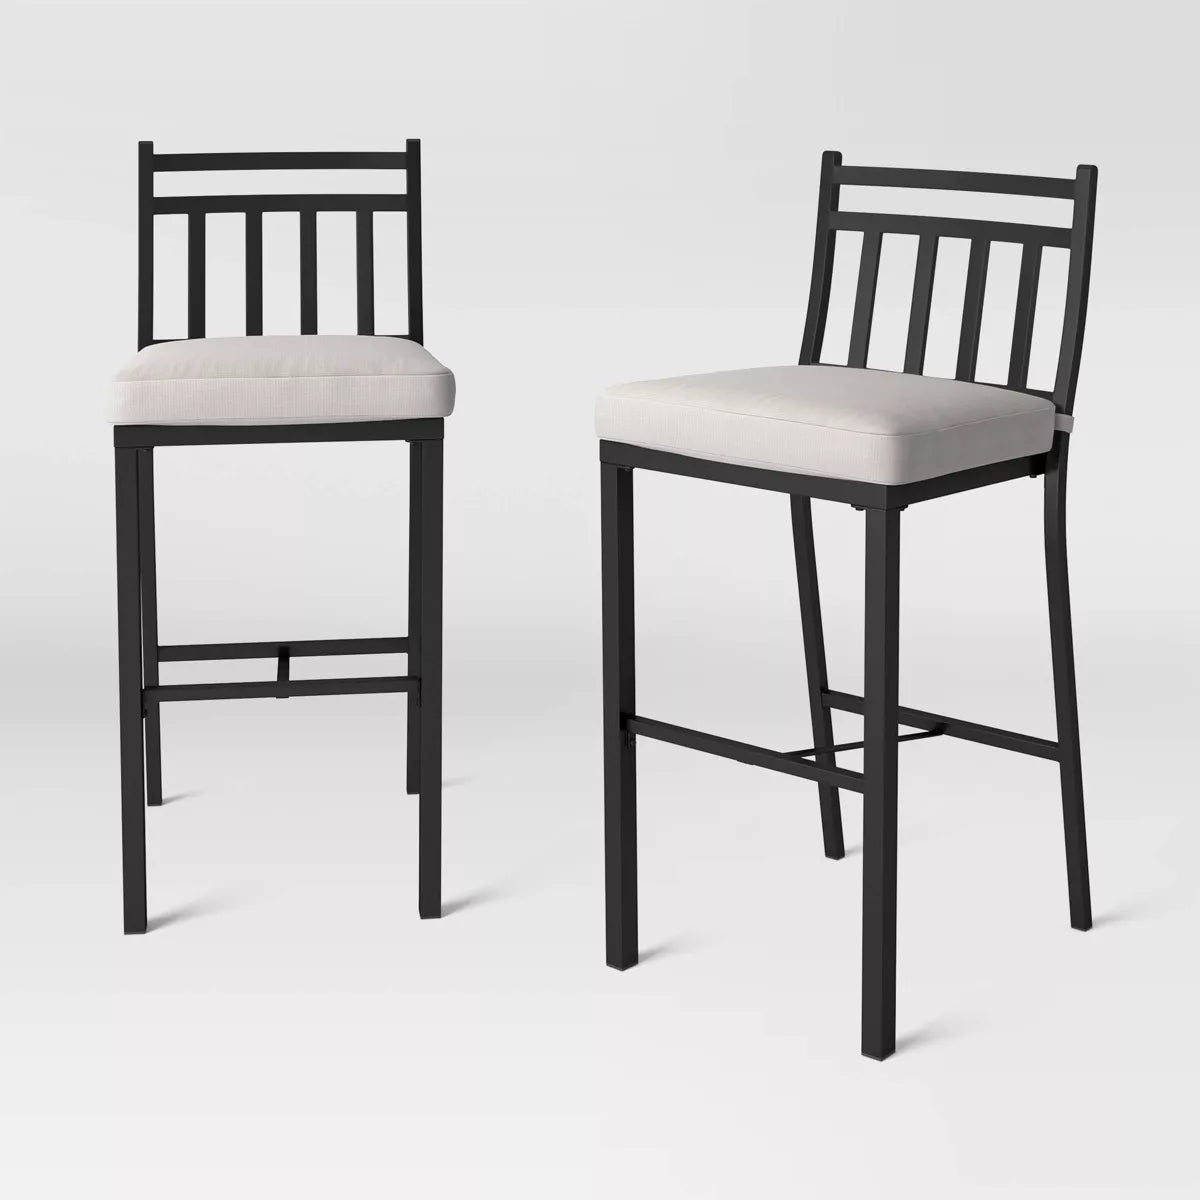 Fairmont 2pk Bar Height Patio Chairs - Black - Threshold™